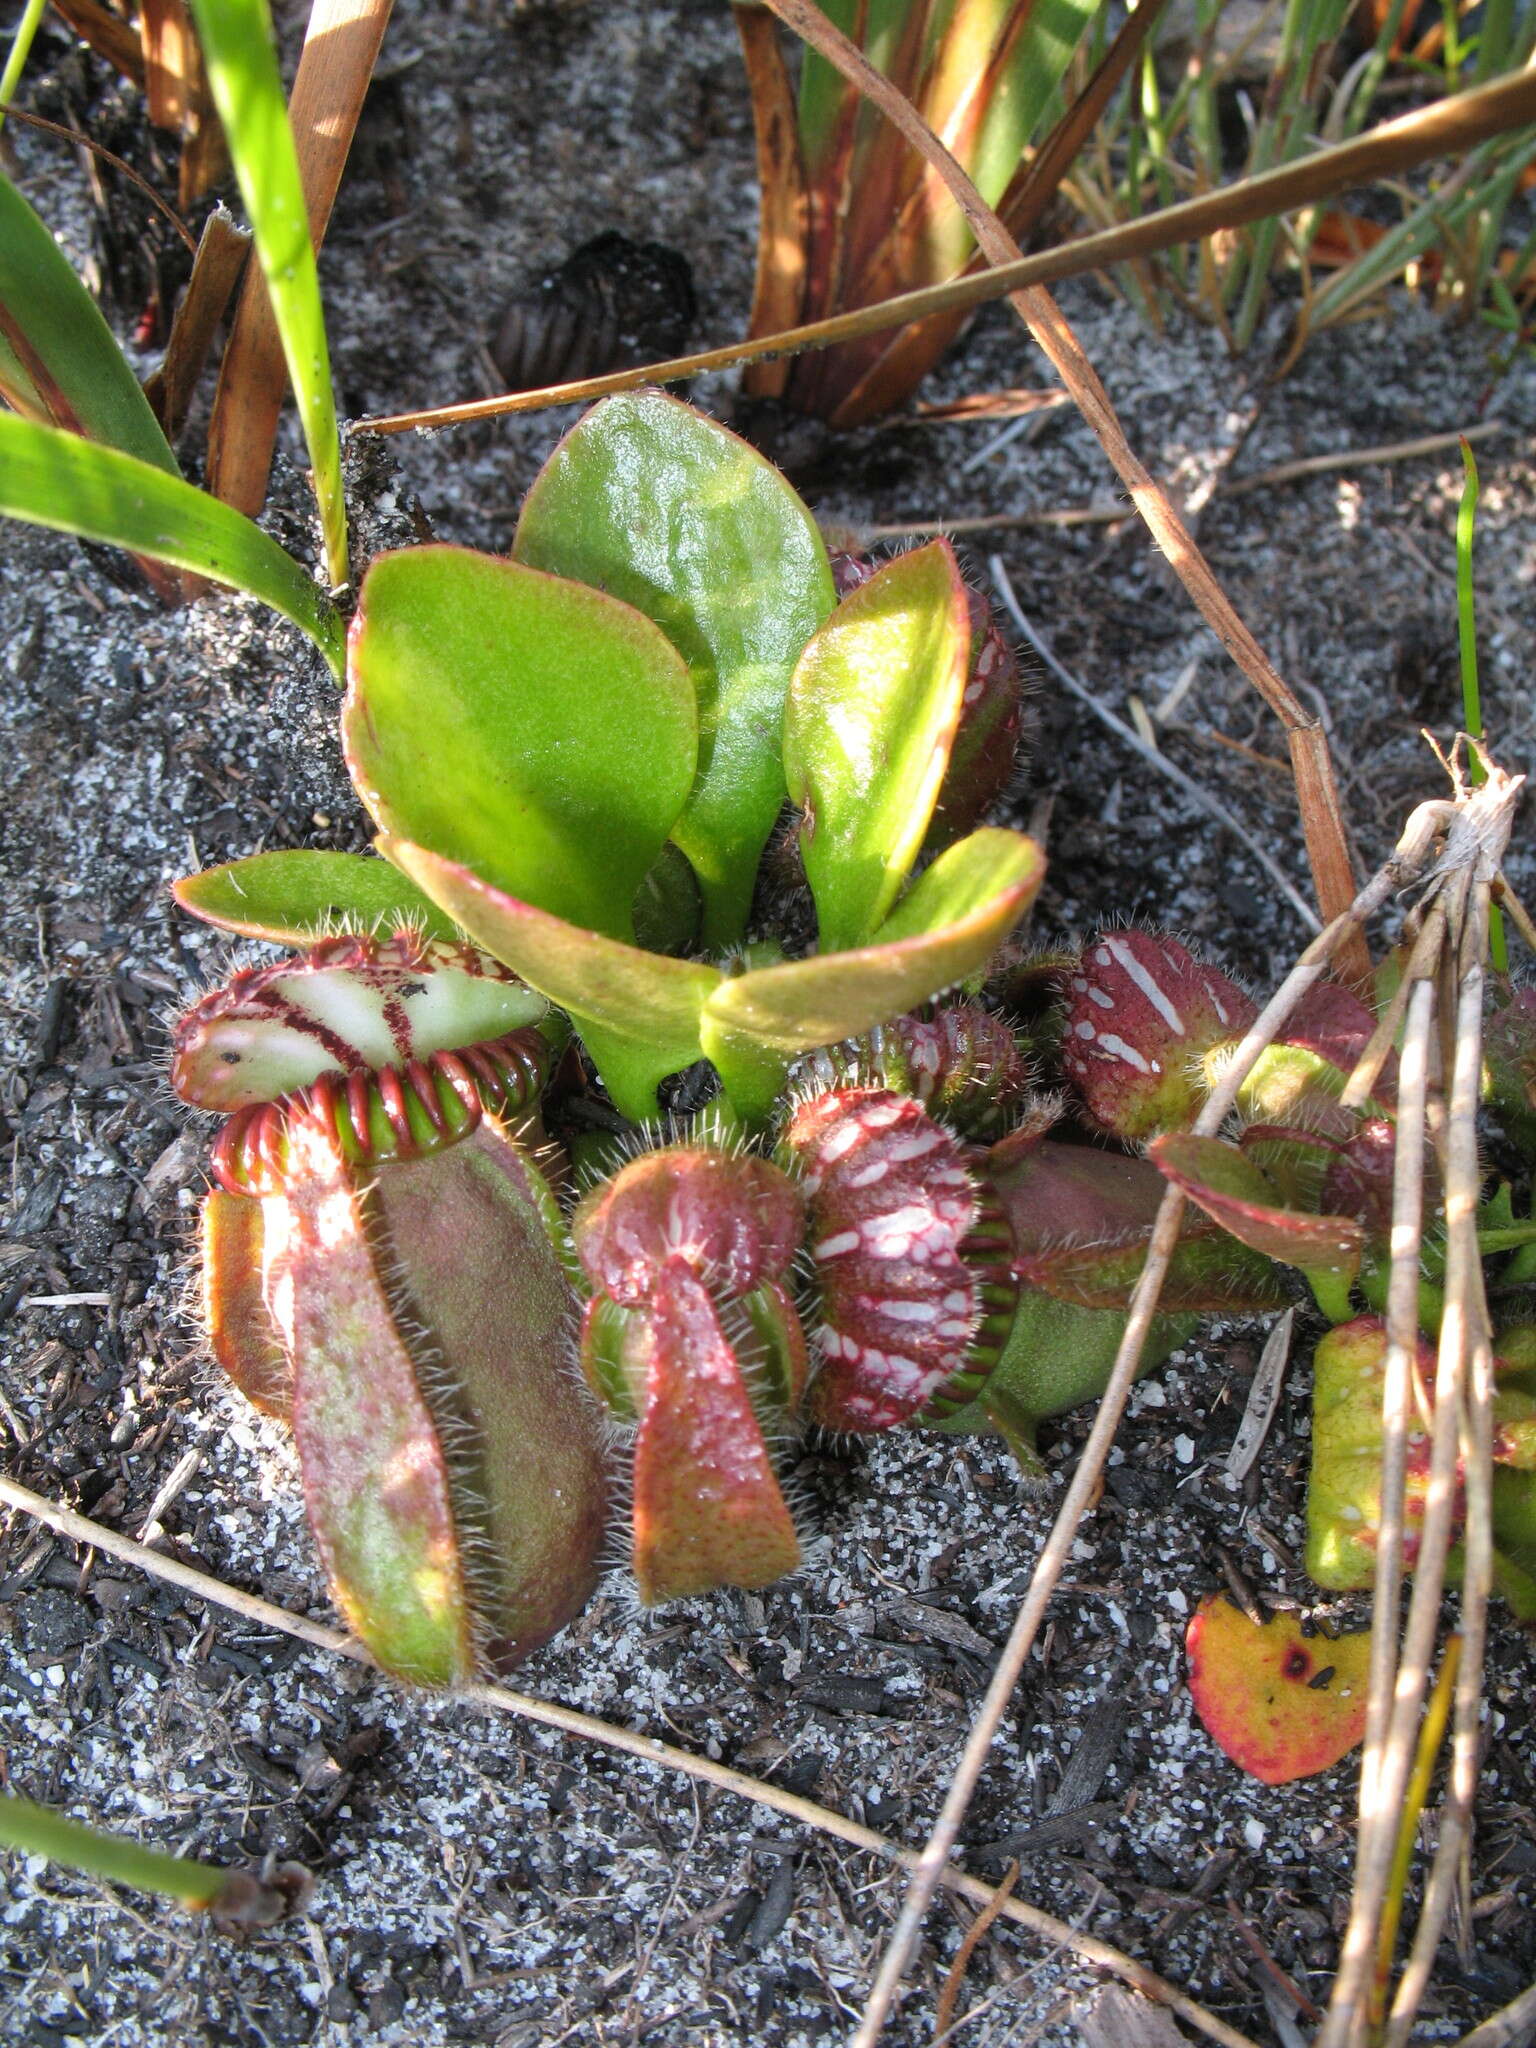 Image of Albany pitcher plant, Australian pitcher plant